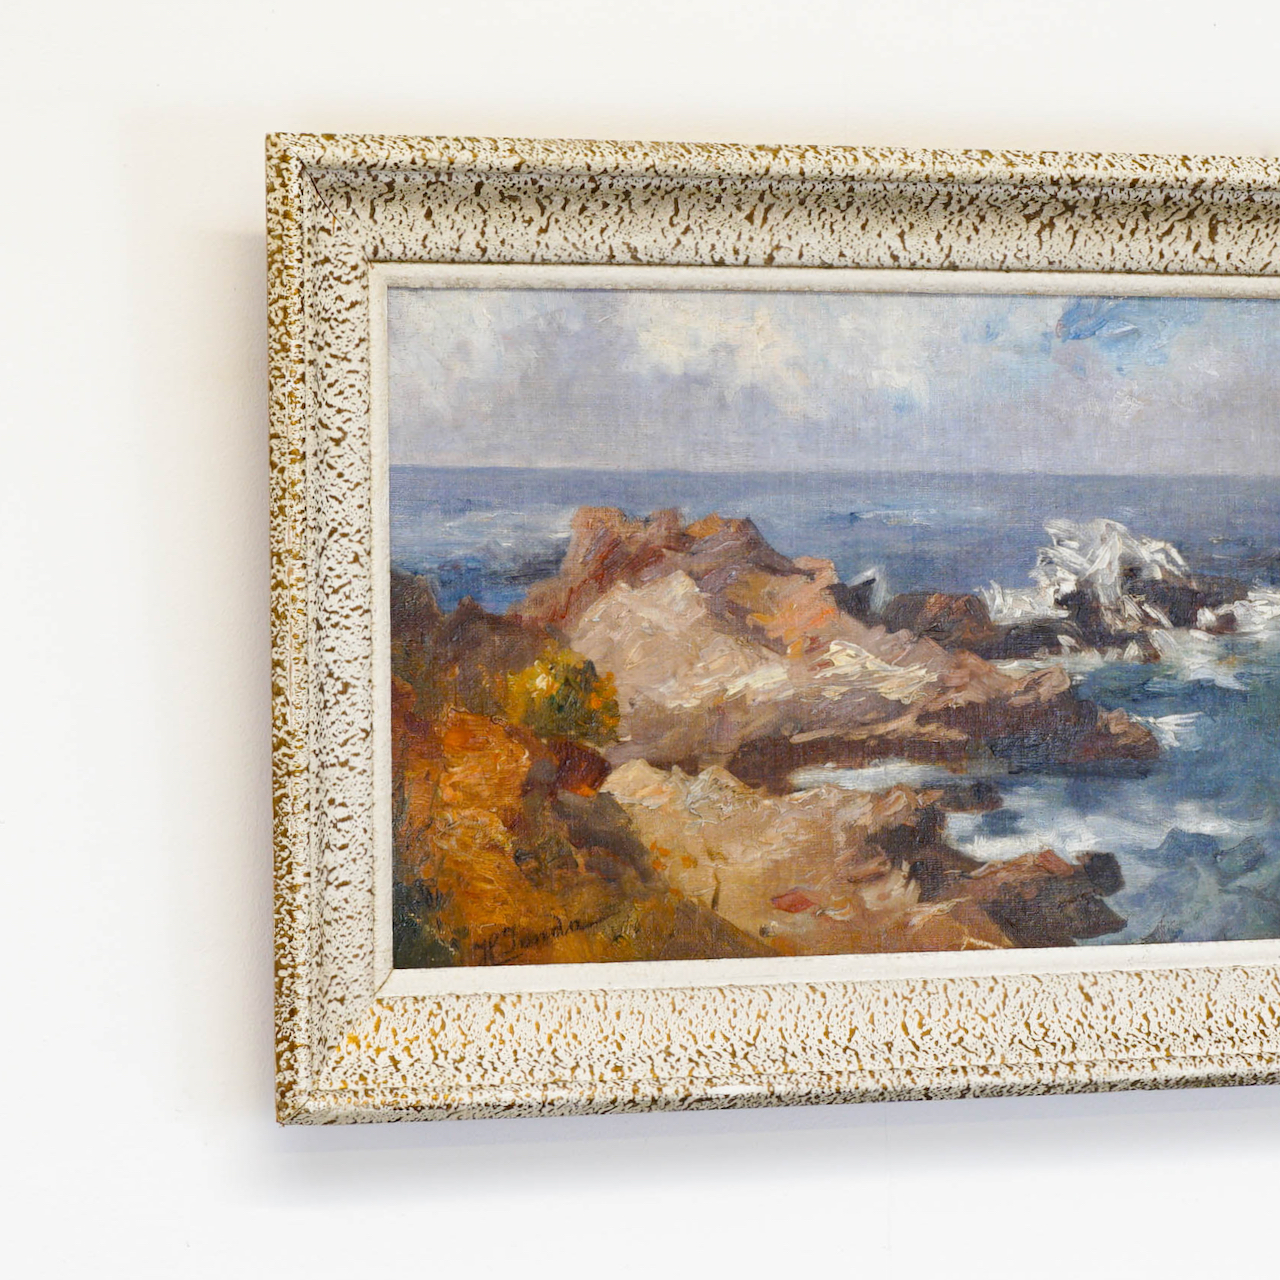 131-31 - Oil Painting of the Atlantic Coast